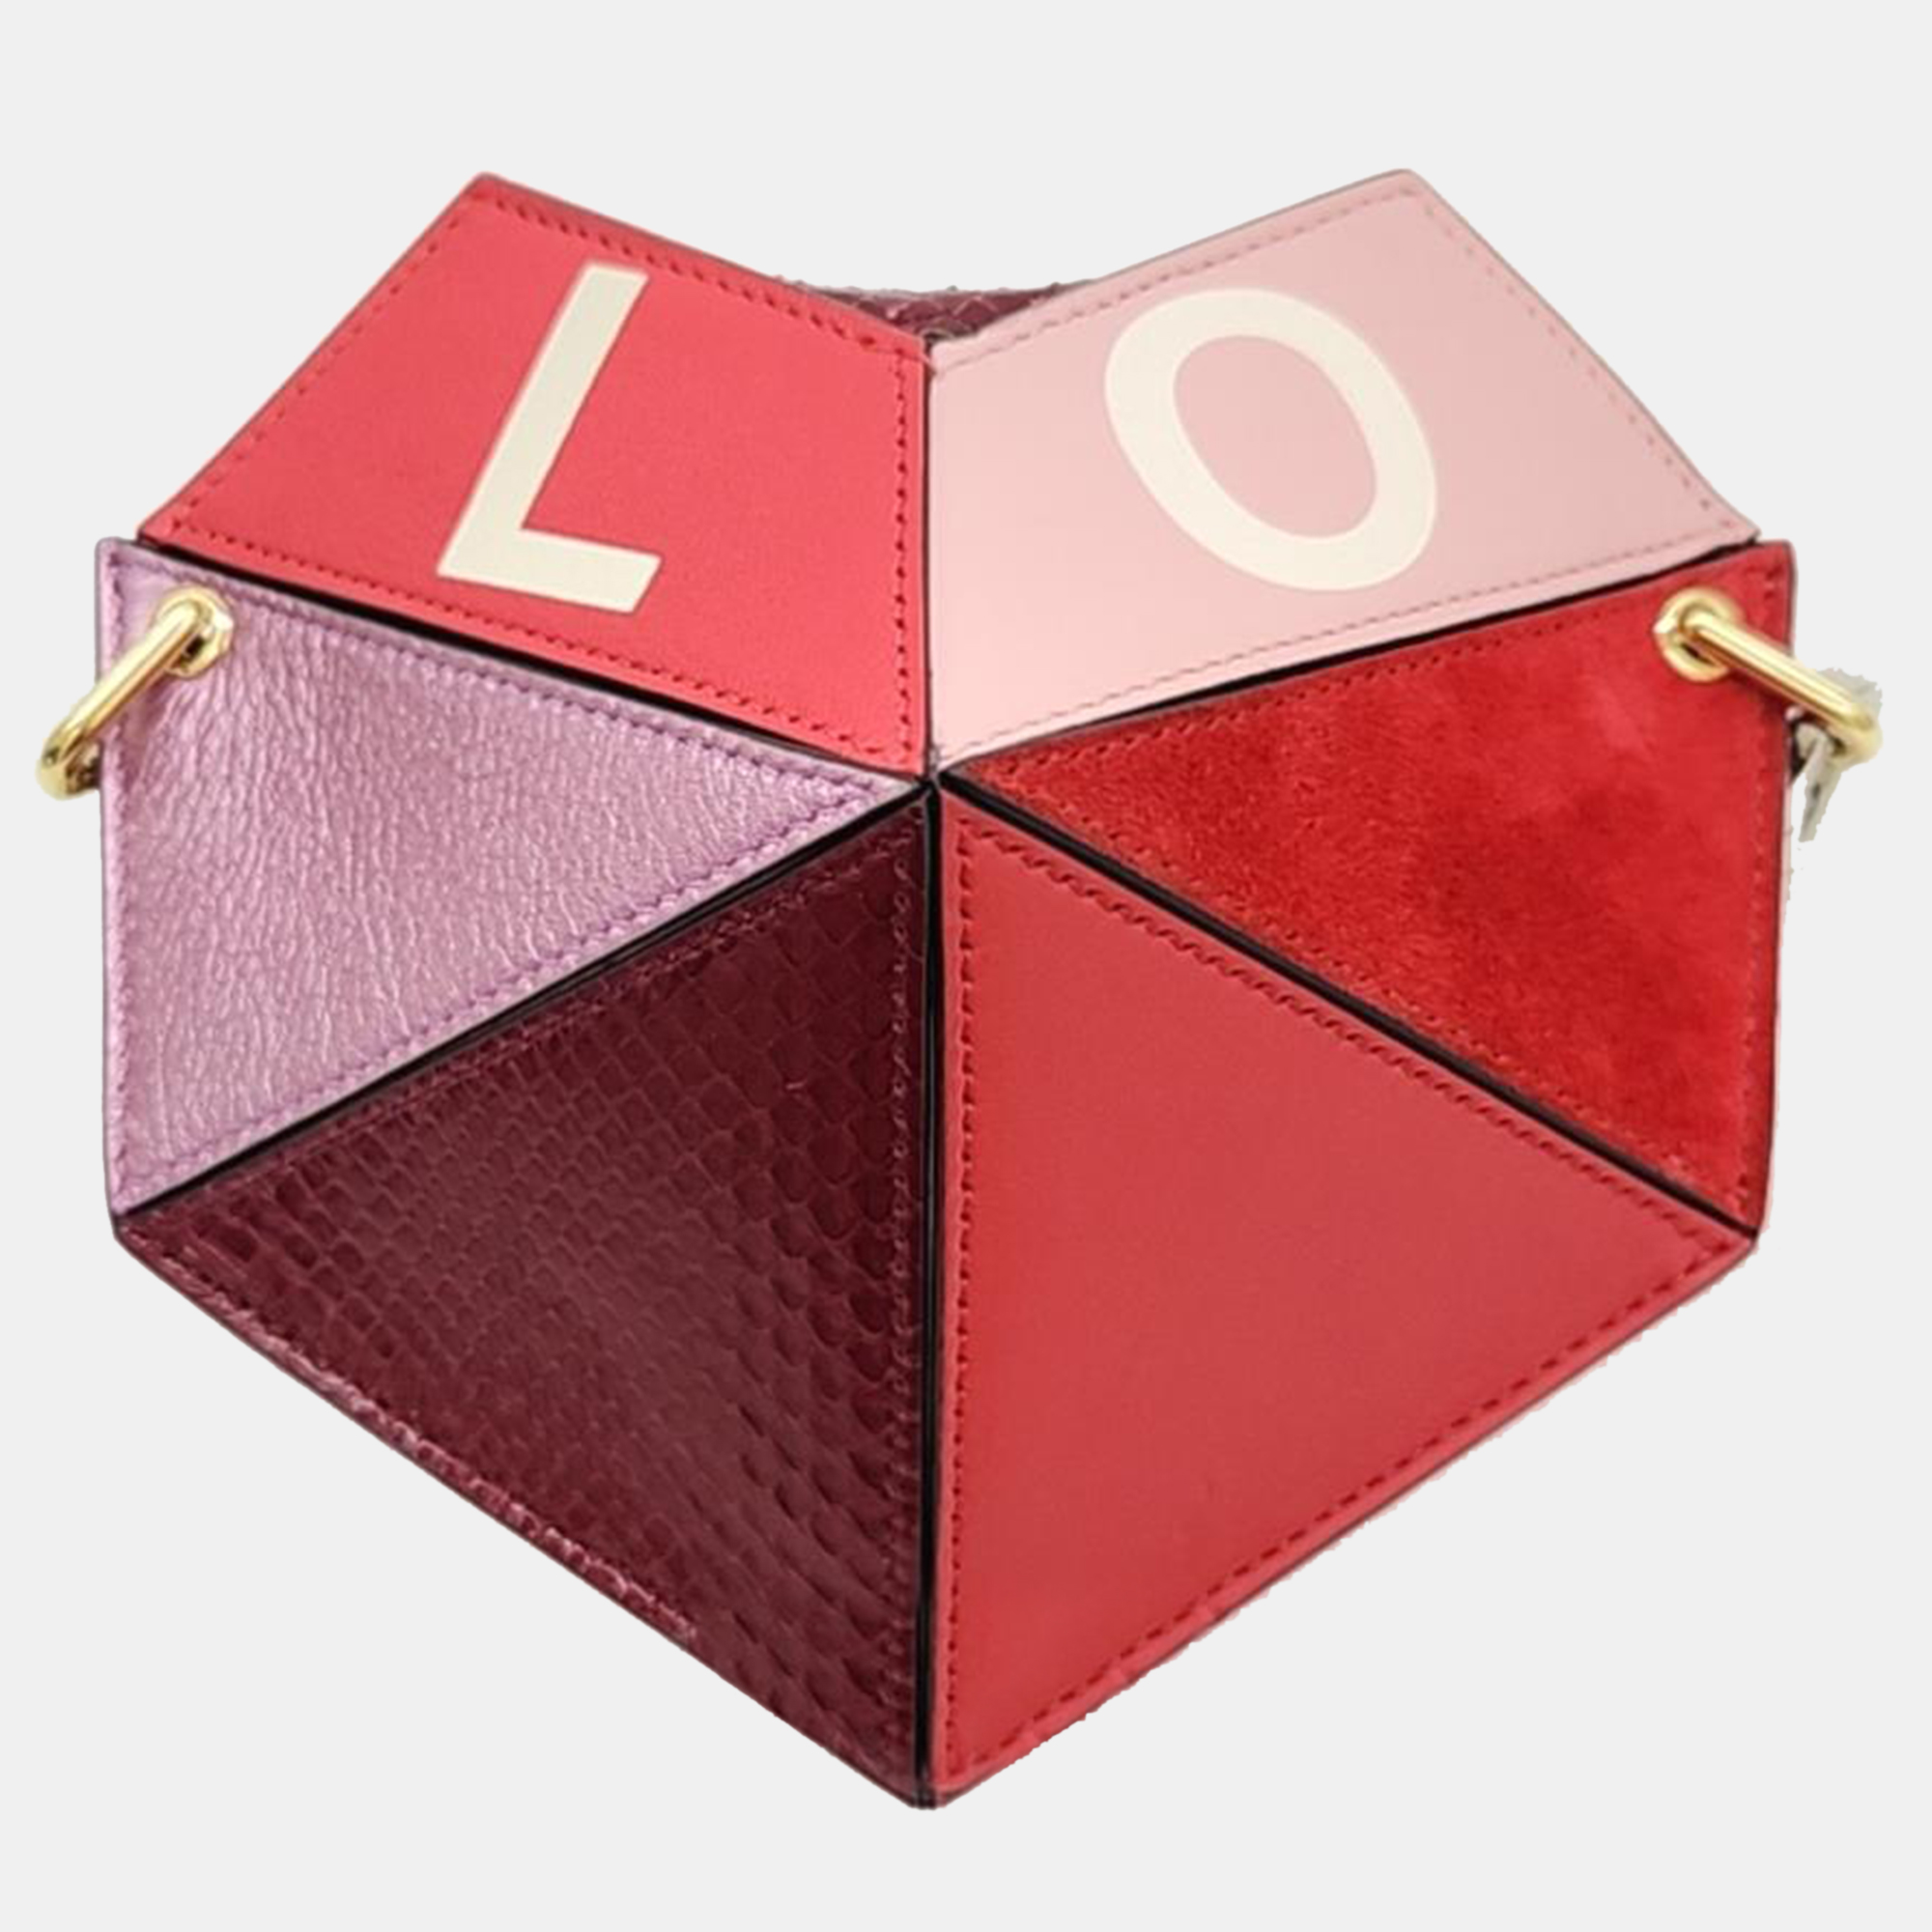 Gucci valentine's day small heart crossbody bag (678131)